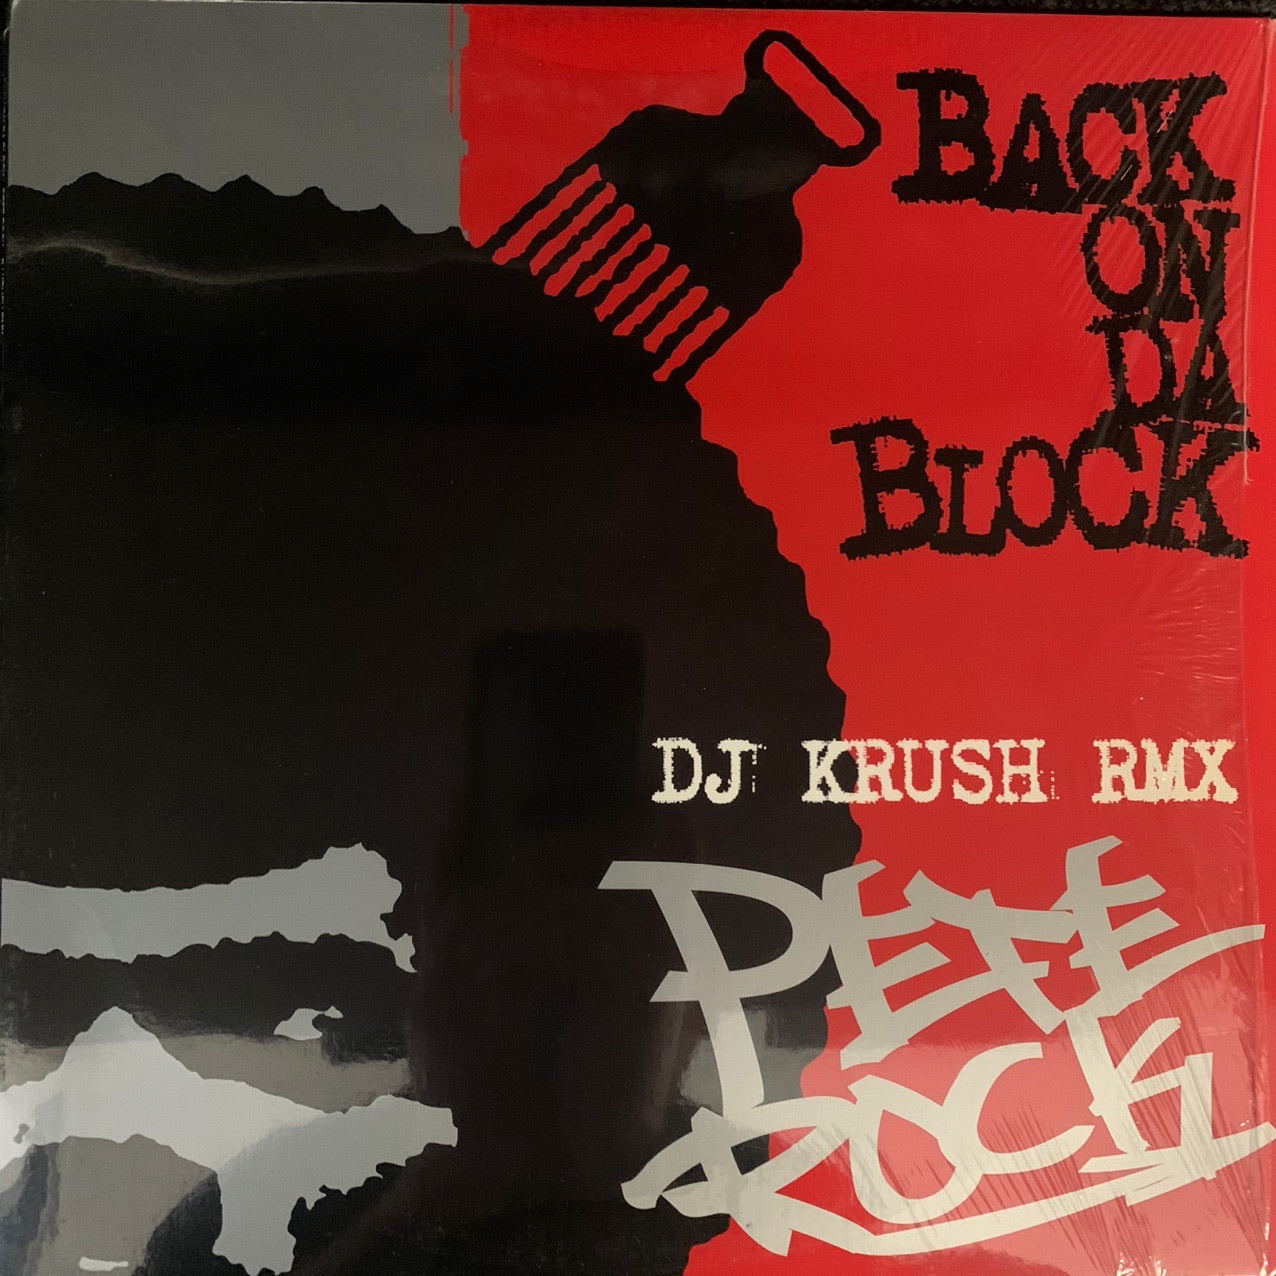 Pete Rock “Back On Da Block” DJ Krush Remix 12inch Vinyl – Classic